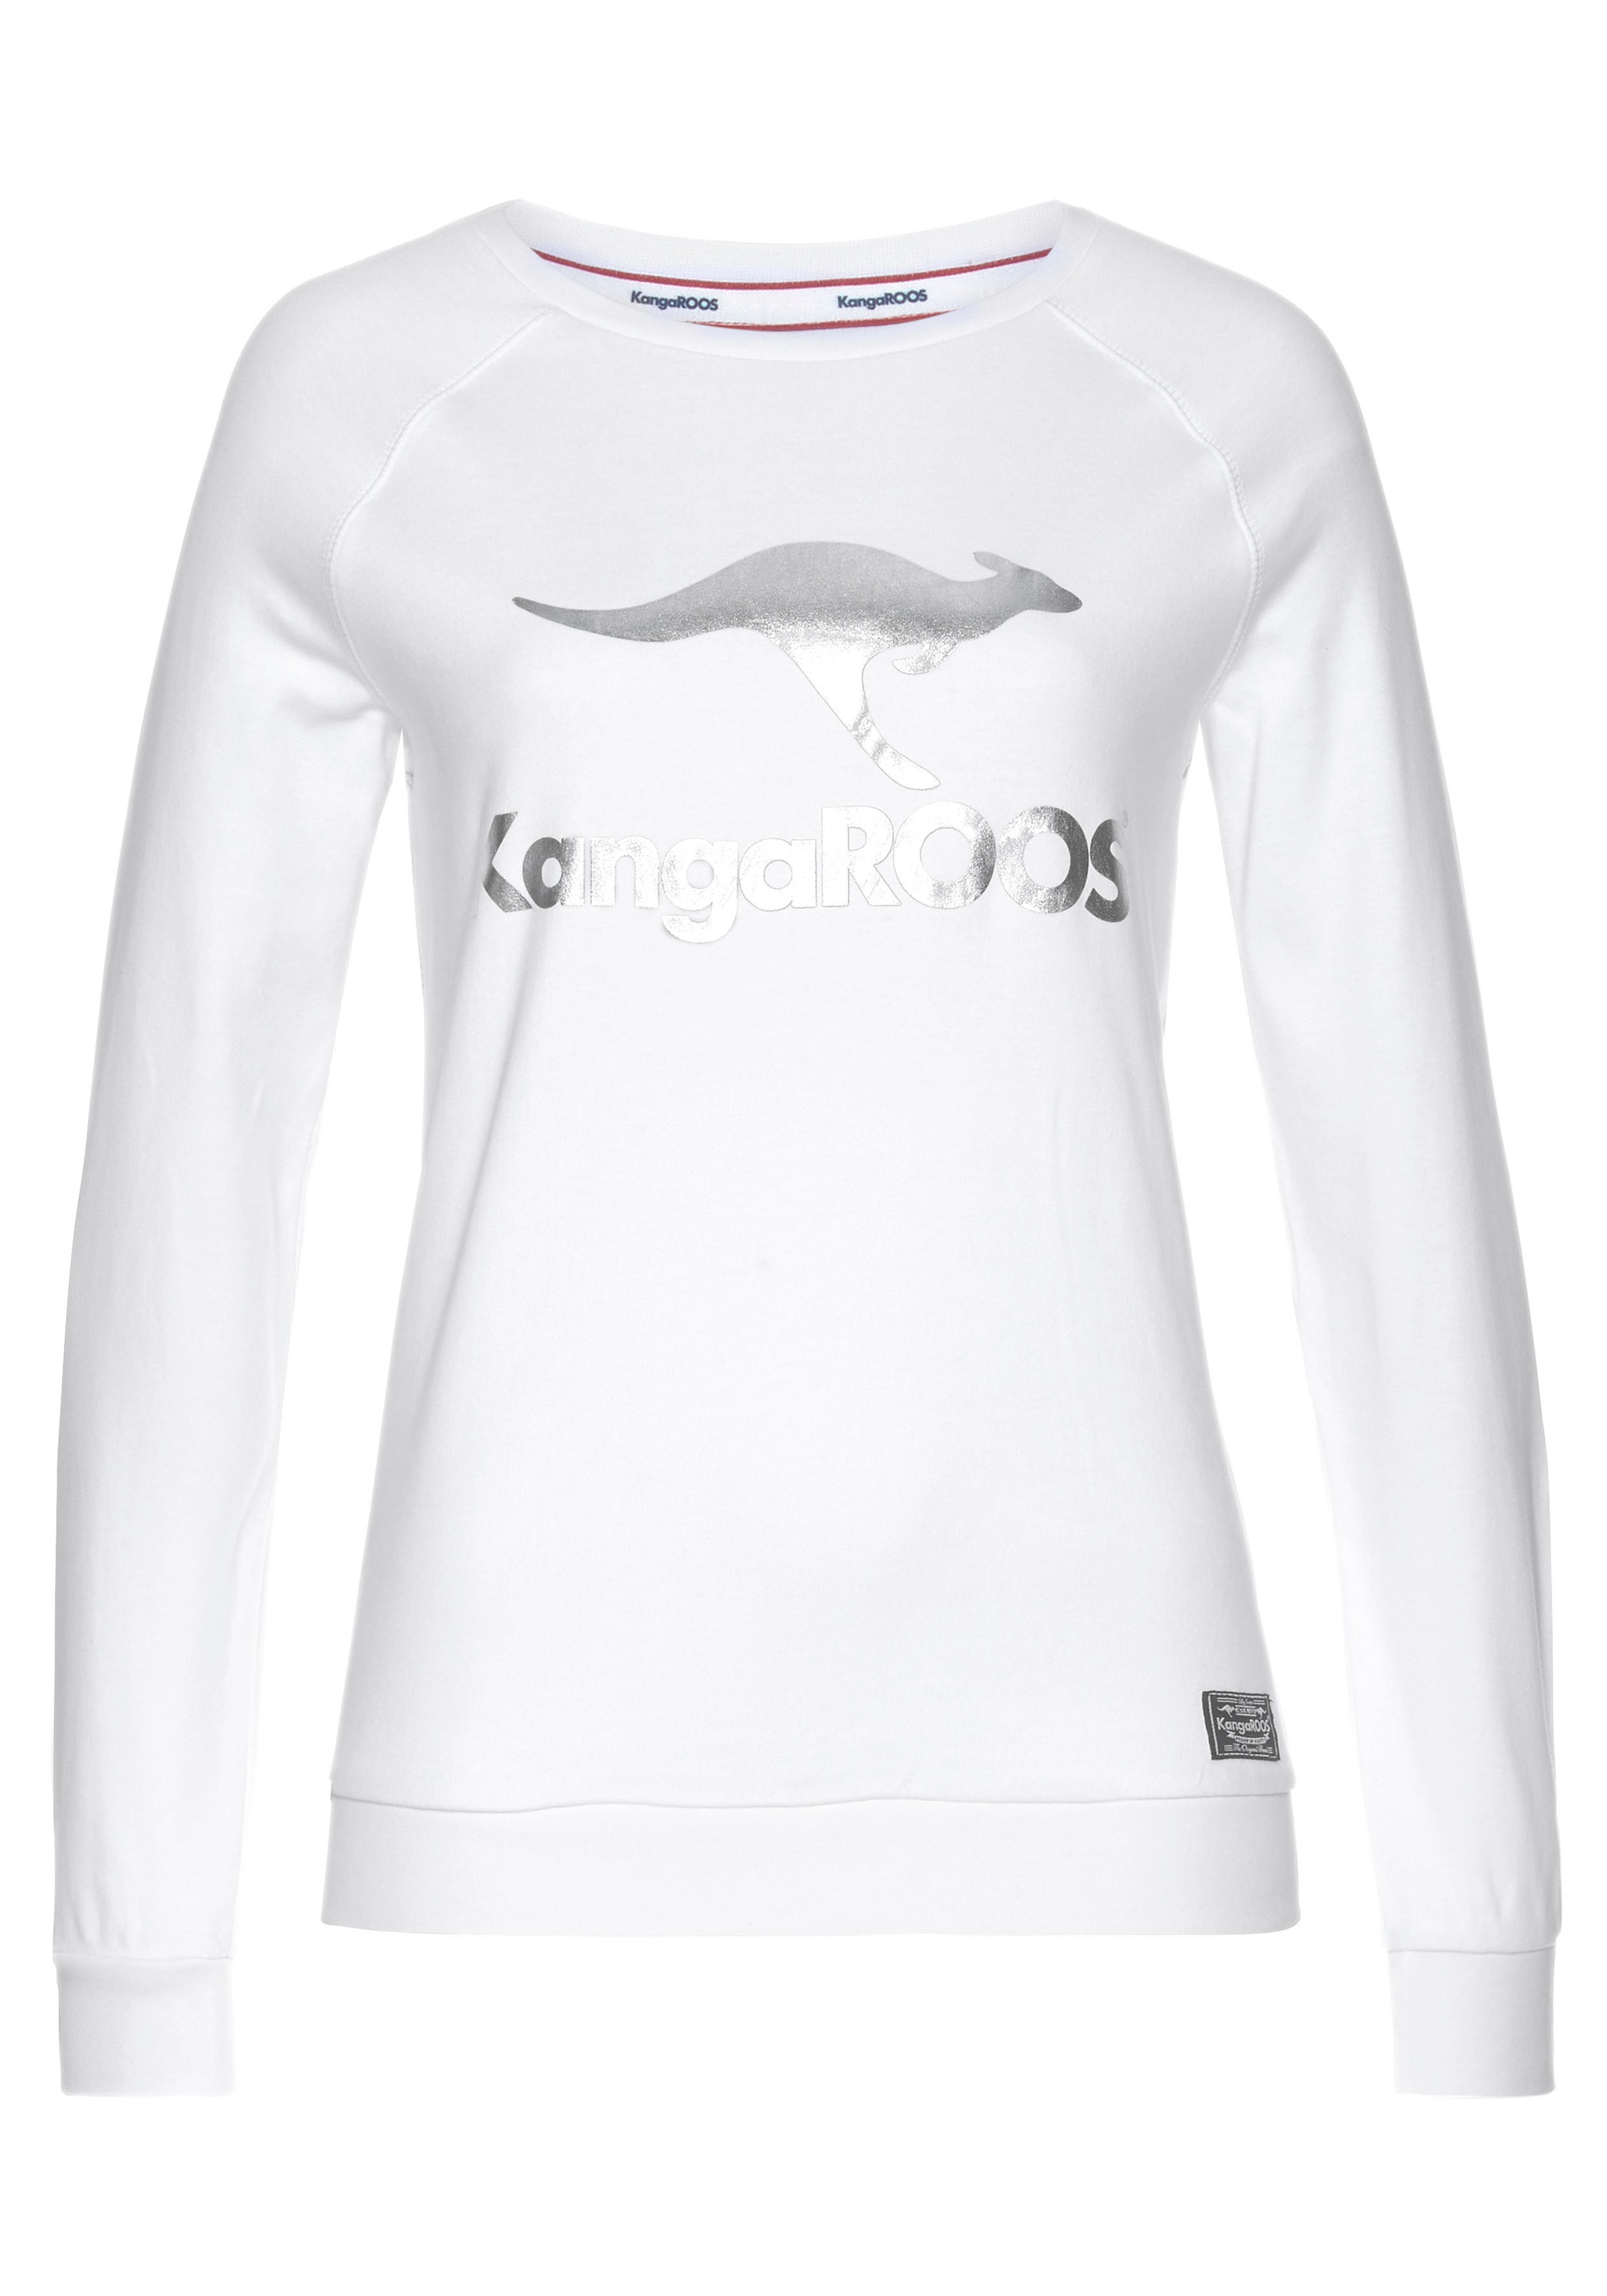 KangaROOS Sweater, online großem vorne mit Label-Print